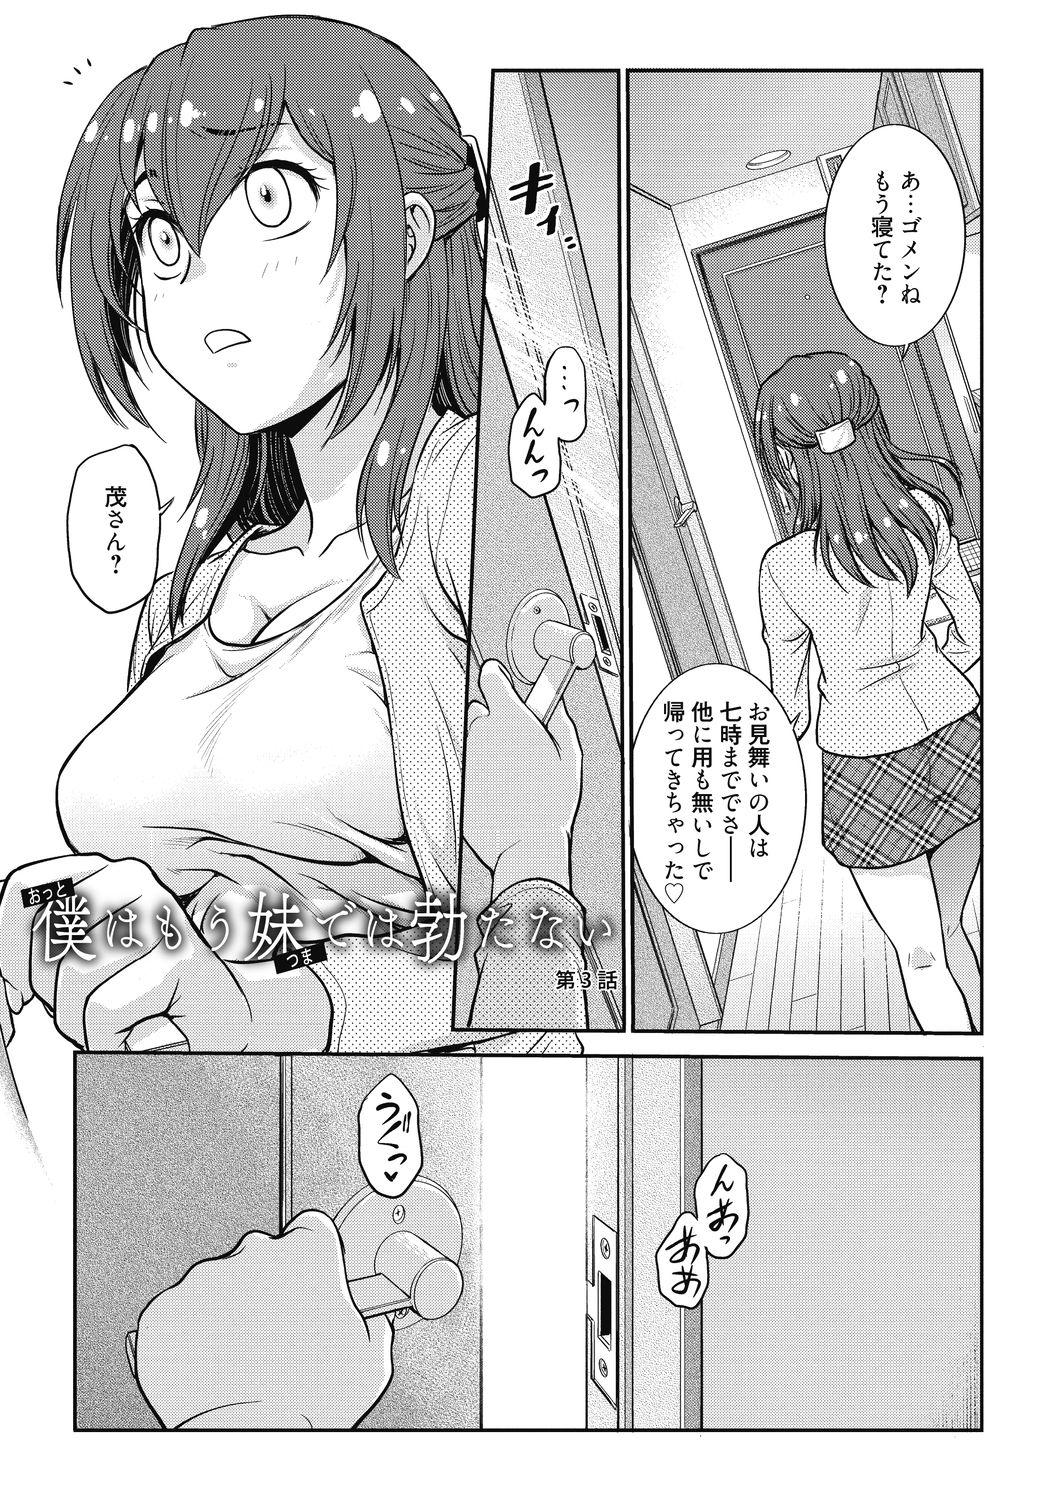 Kanojo no Shitagi o Nusundara... - I tried to steal her underwear... 128